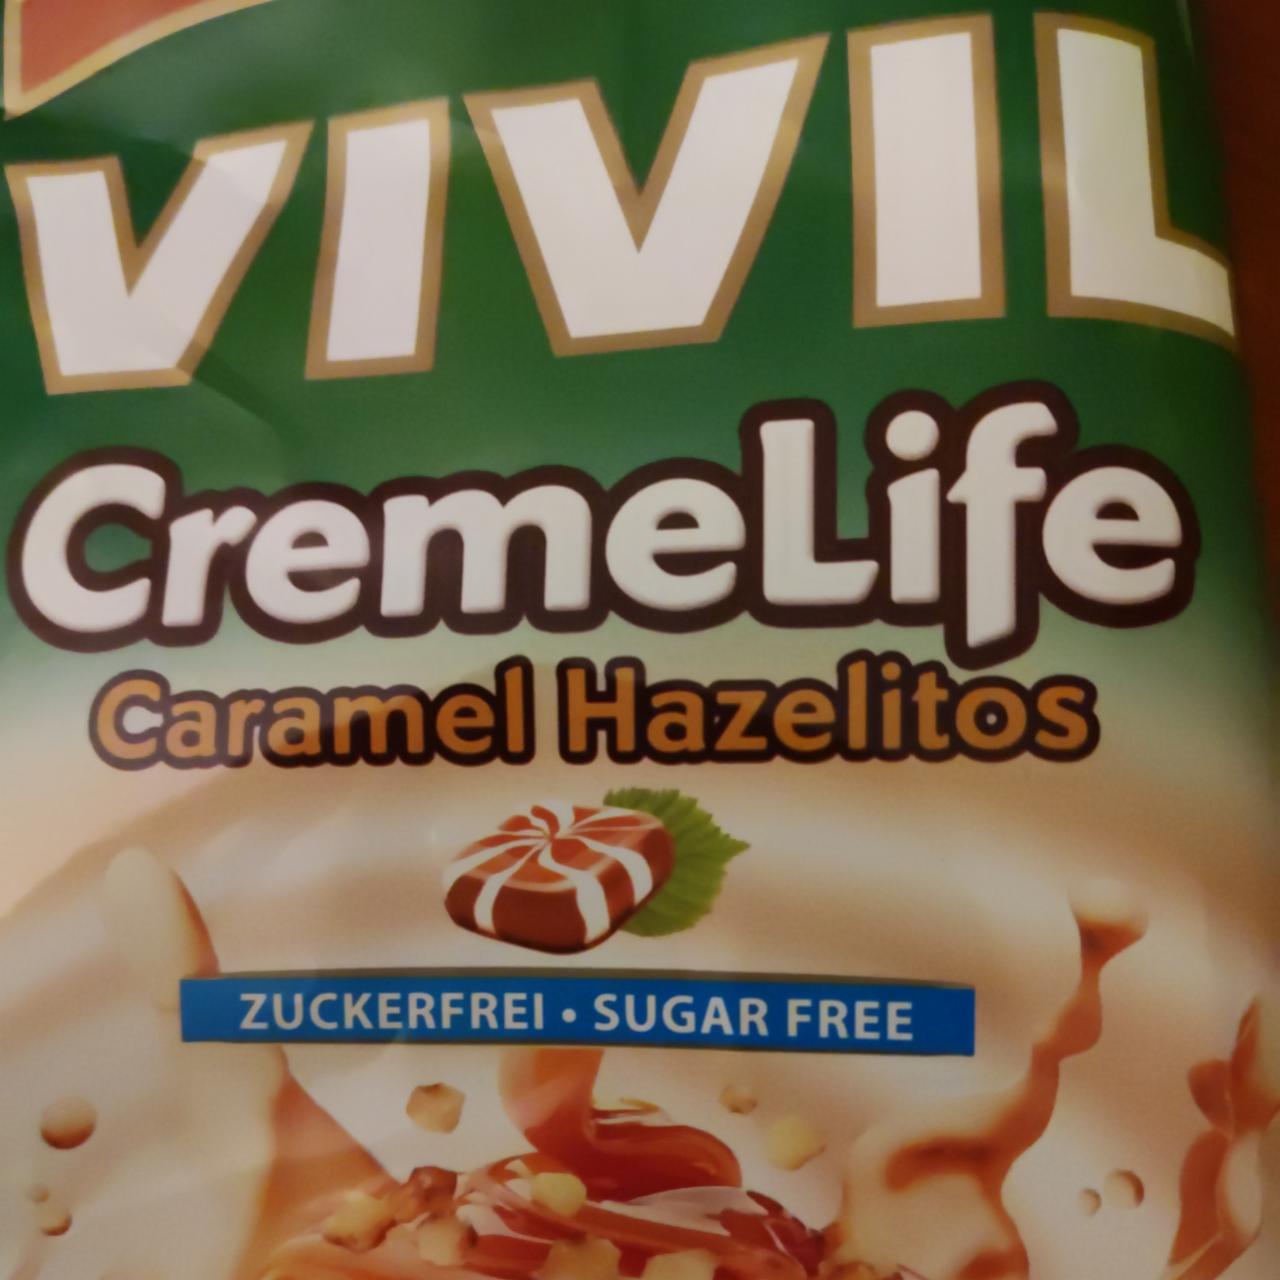 Fotografie - CremeLife Caramel Hazelitos sugar free Vivil